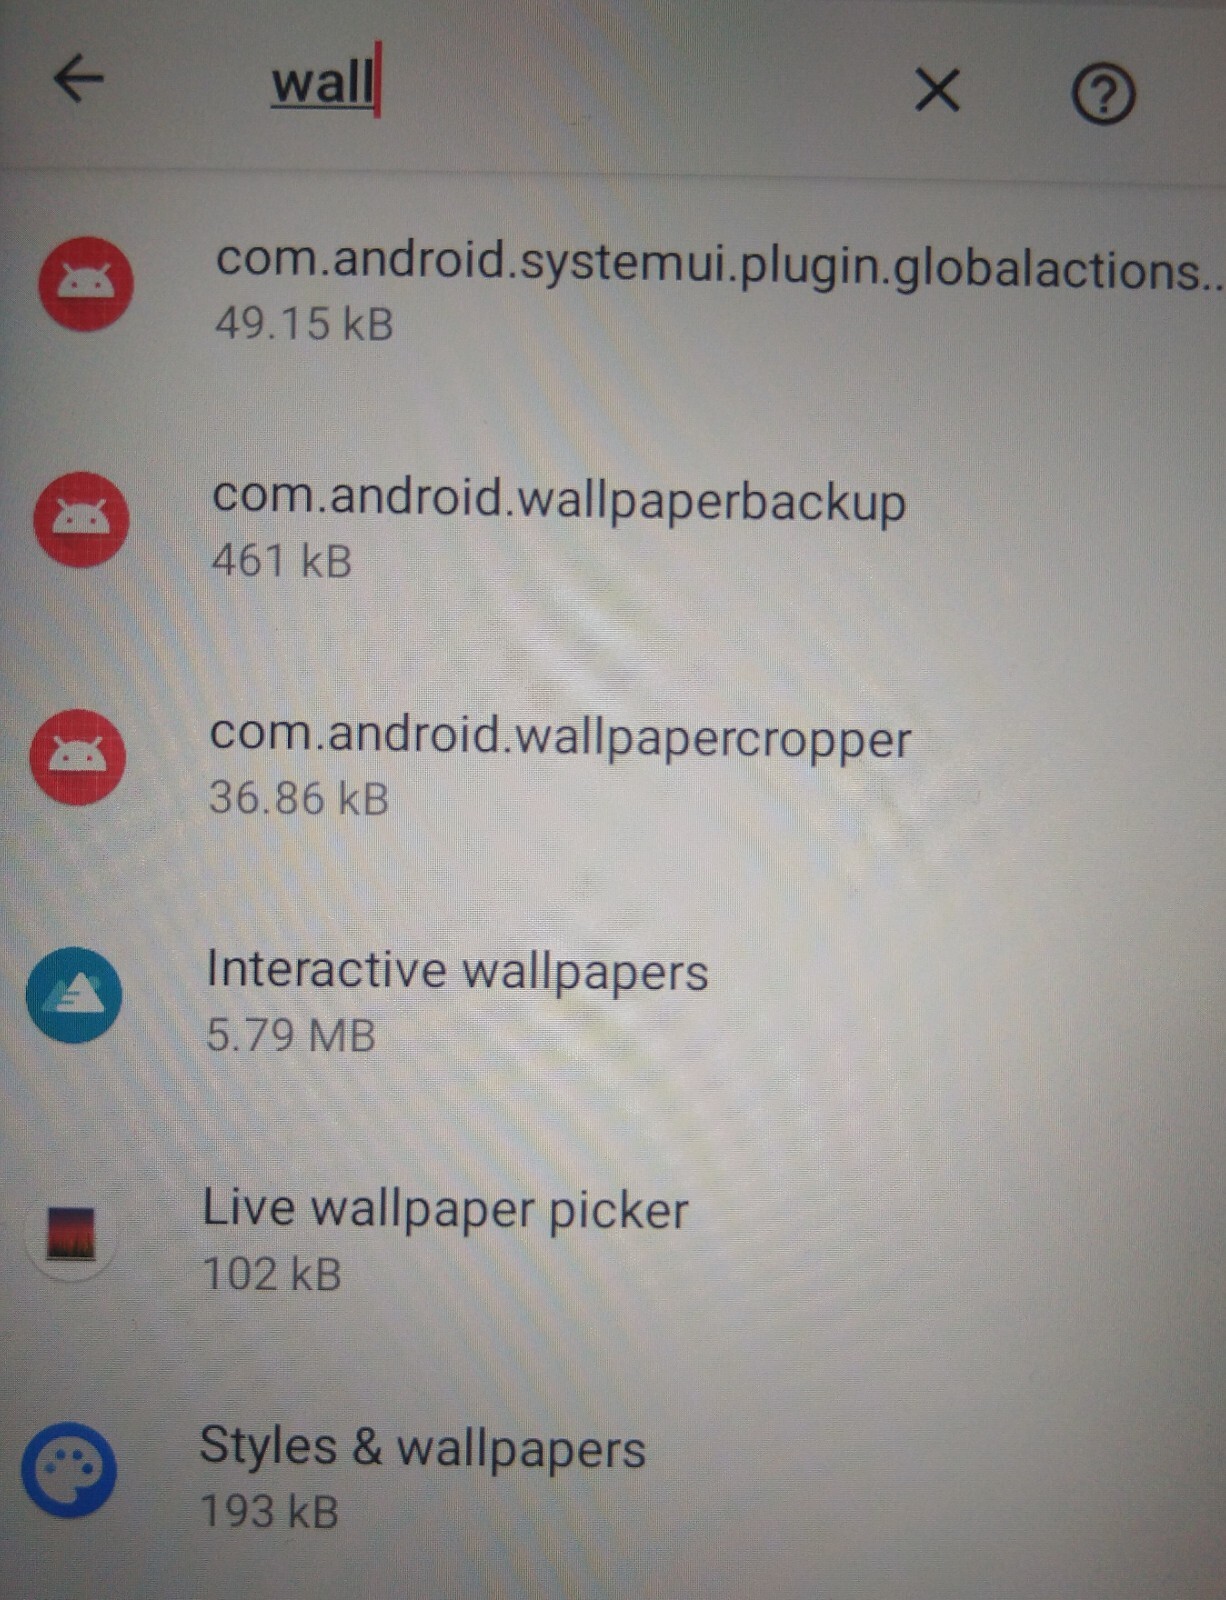 Can-t-change-wallpaper-App-not-installed - English Motorola - MOTO COMMUNITY